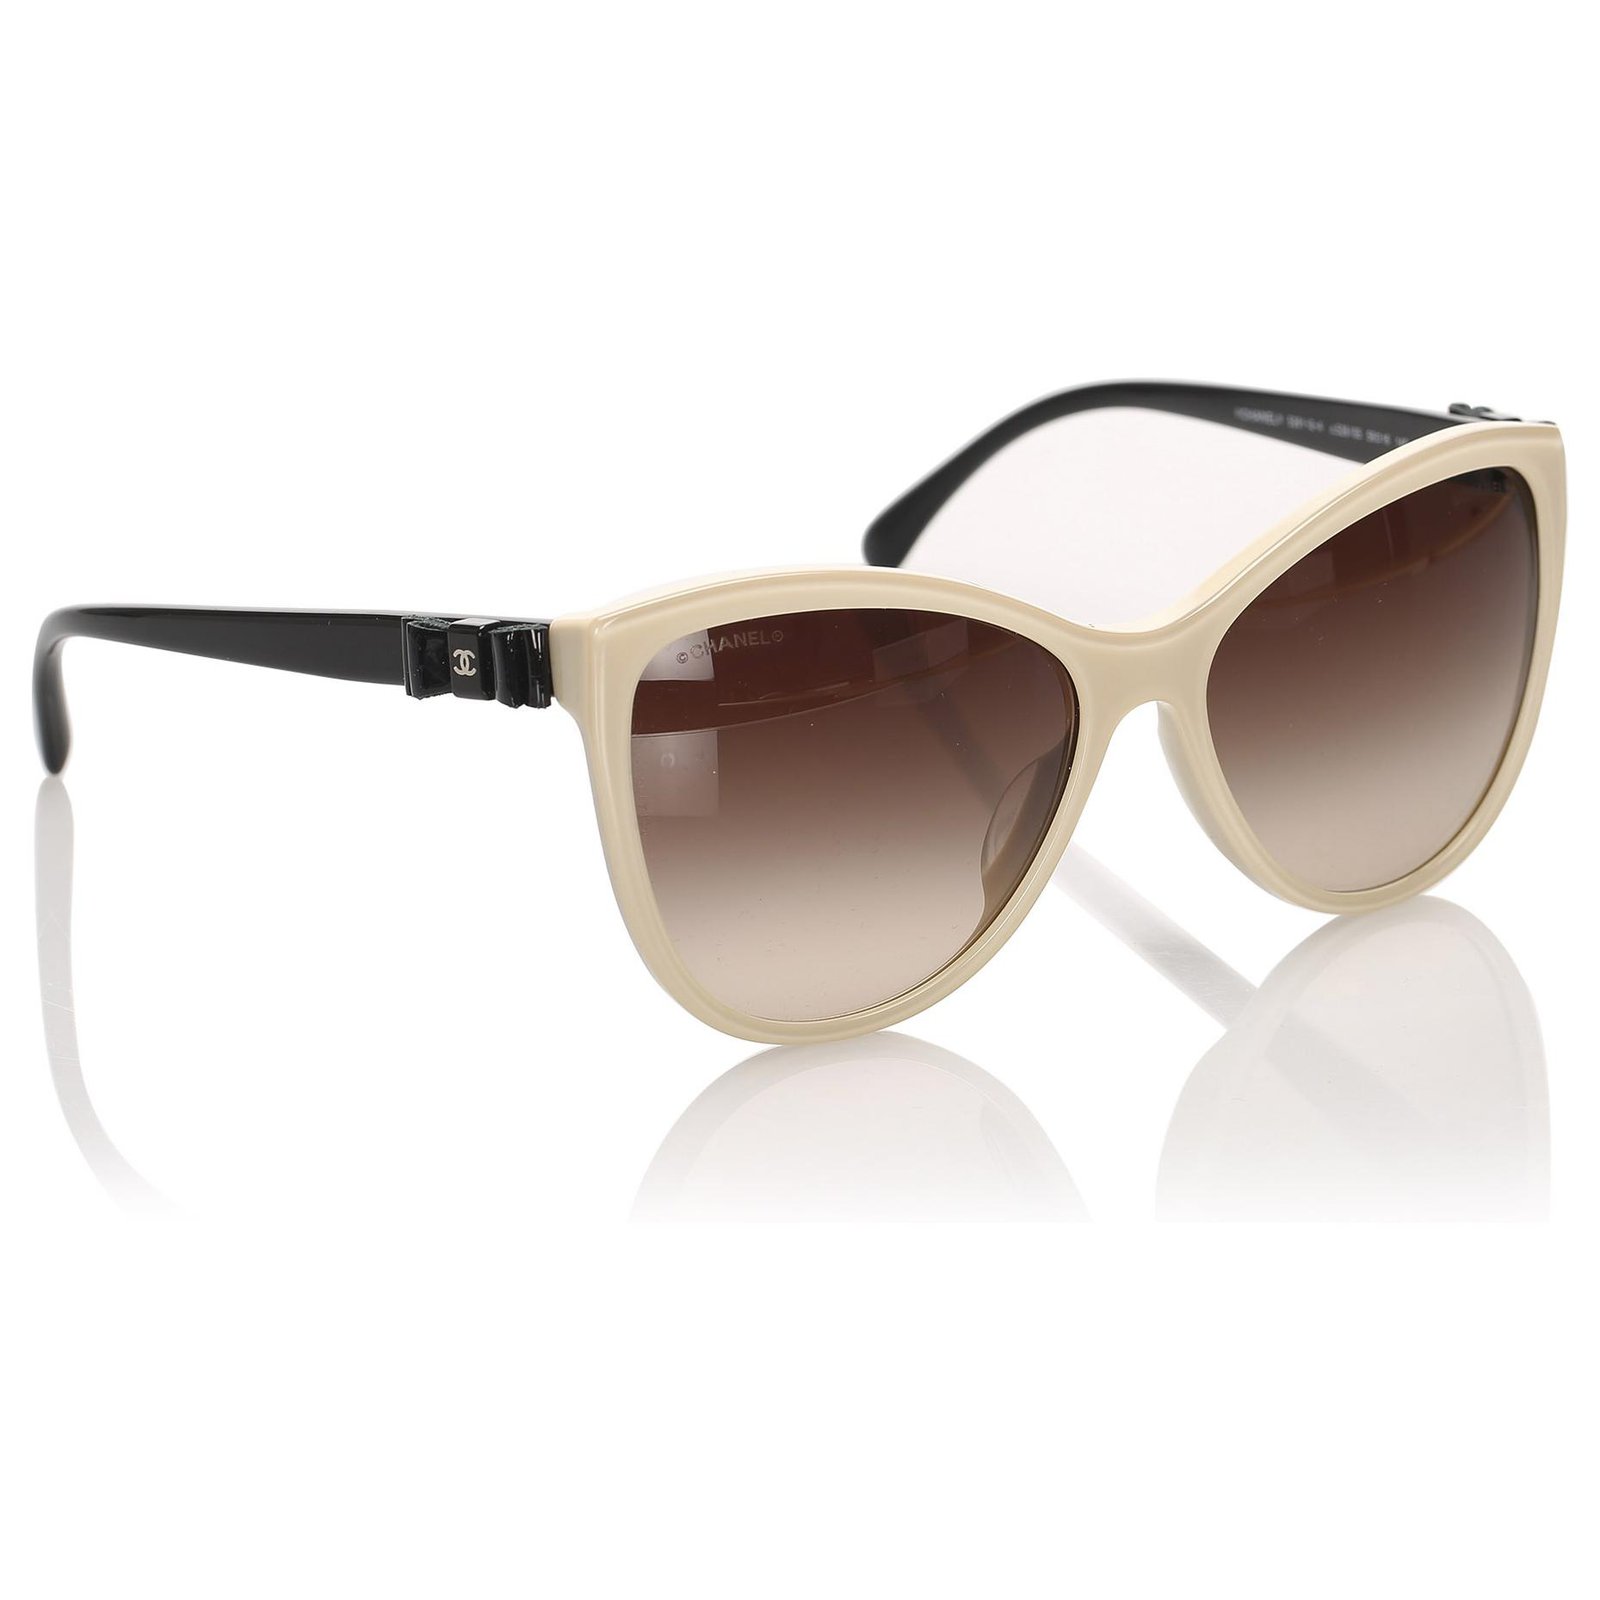 Chanel Black Cat-Eye Tinted Sunglasses